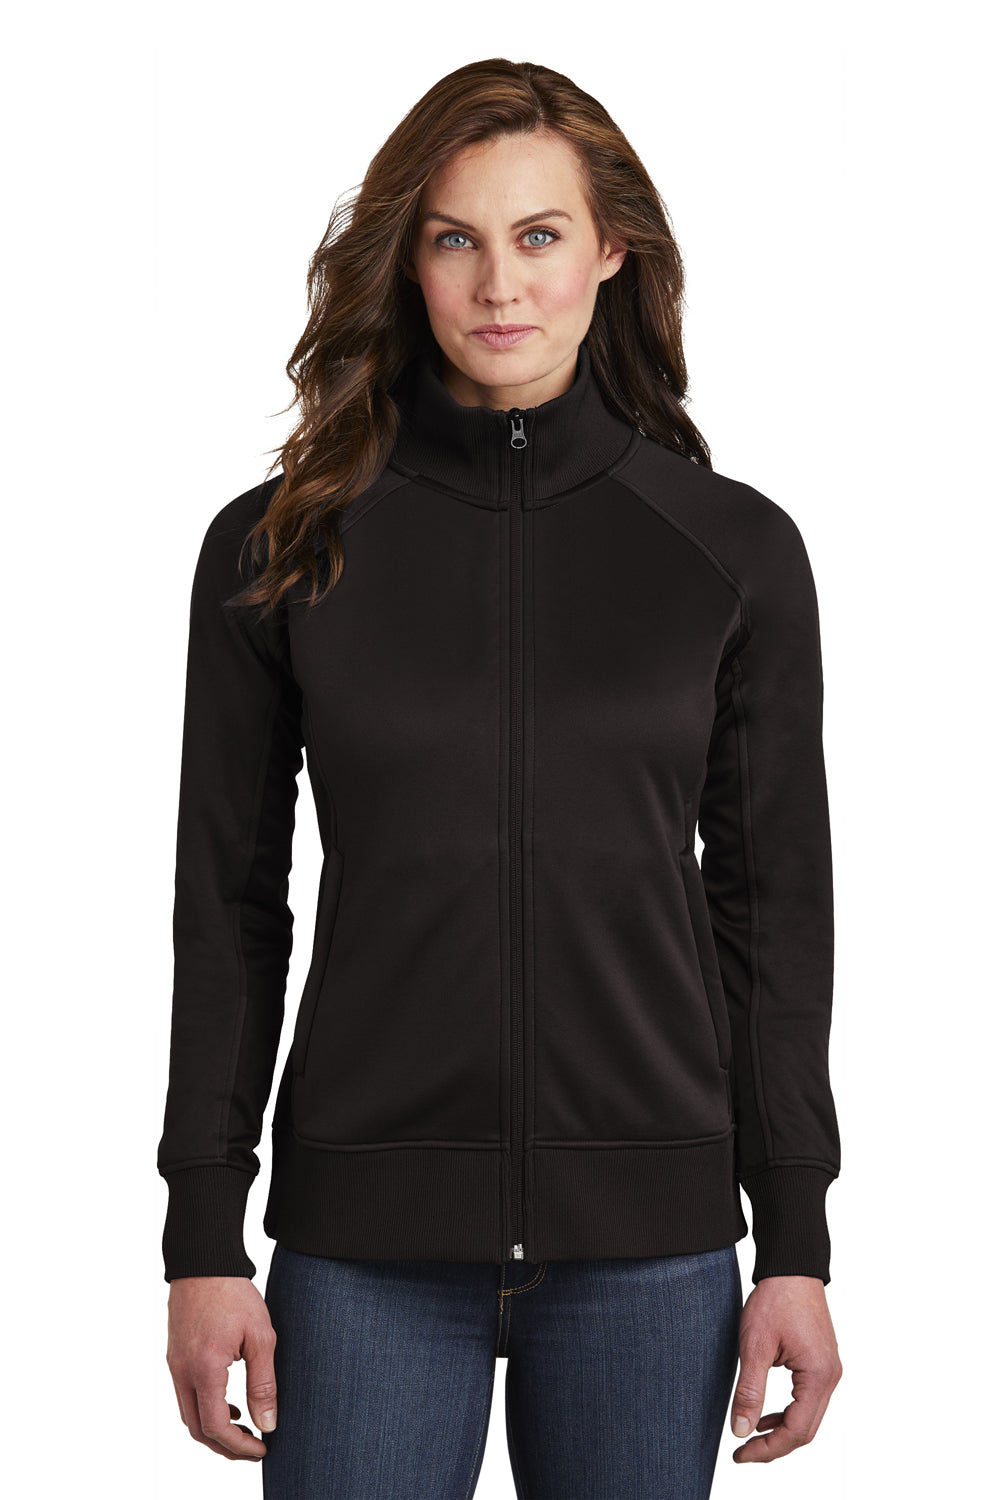 The North Face NF0A3SEV Womens Black Tech Full Zip Fleece Jacket —